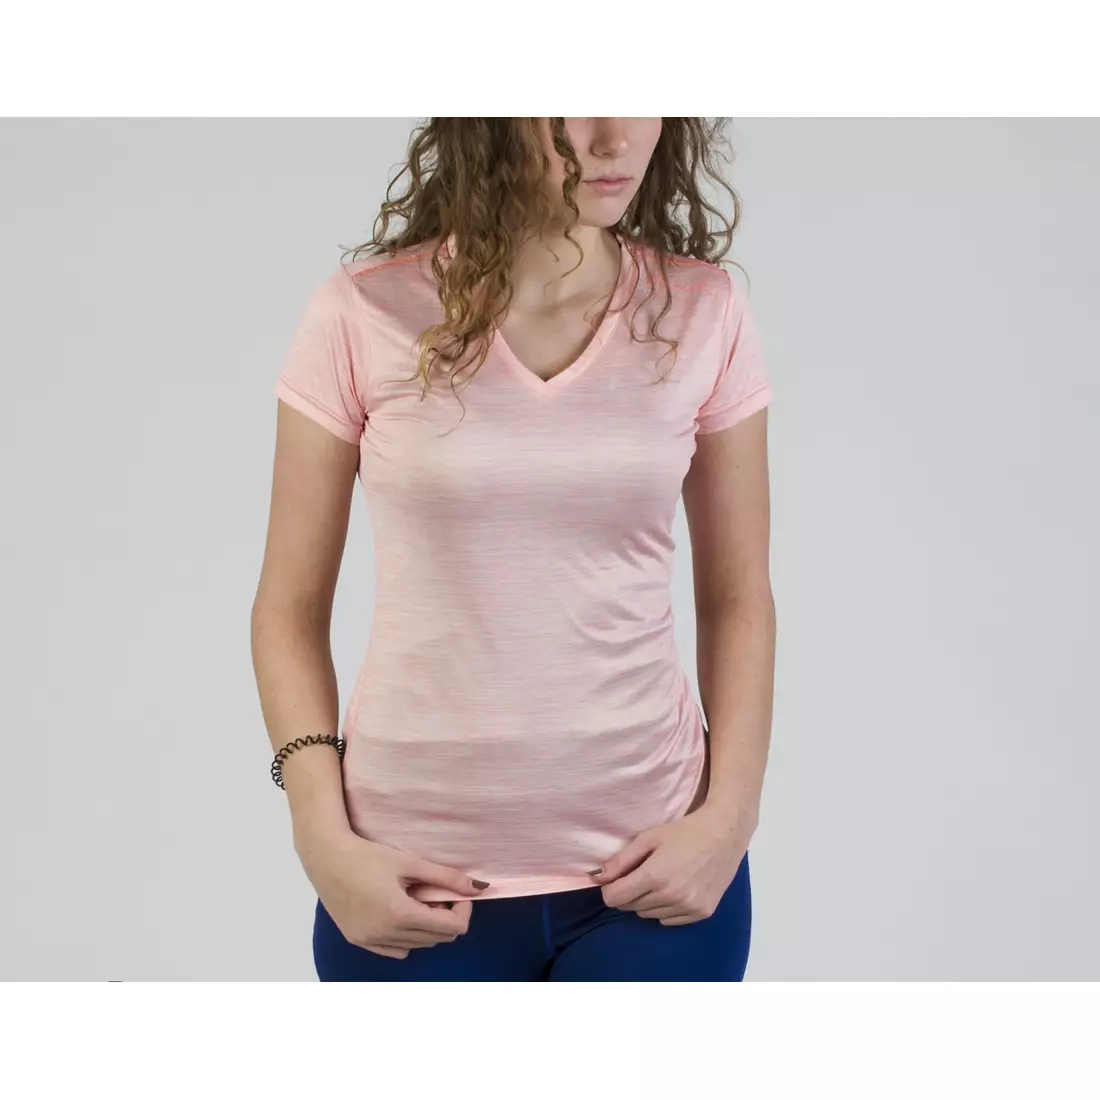 ROGELLI RUN DESIRE 840.264 - Dámské běžecké tričko K/R, pink-coral